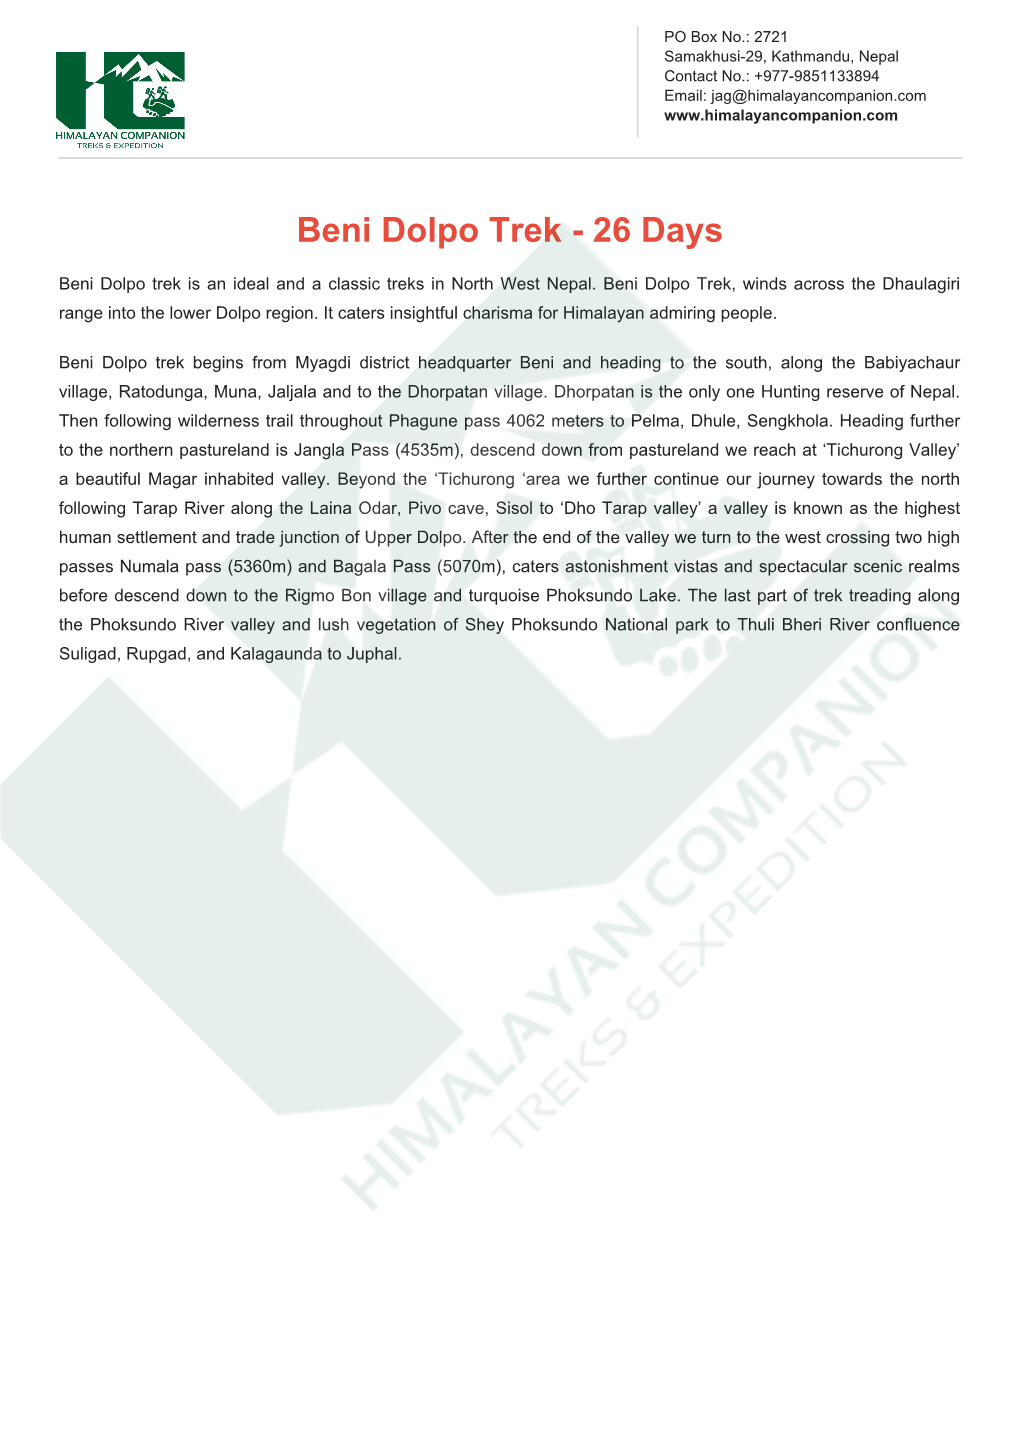 Beni Dolpo Trek - 26 Days